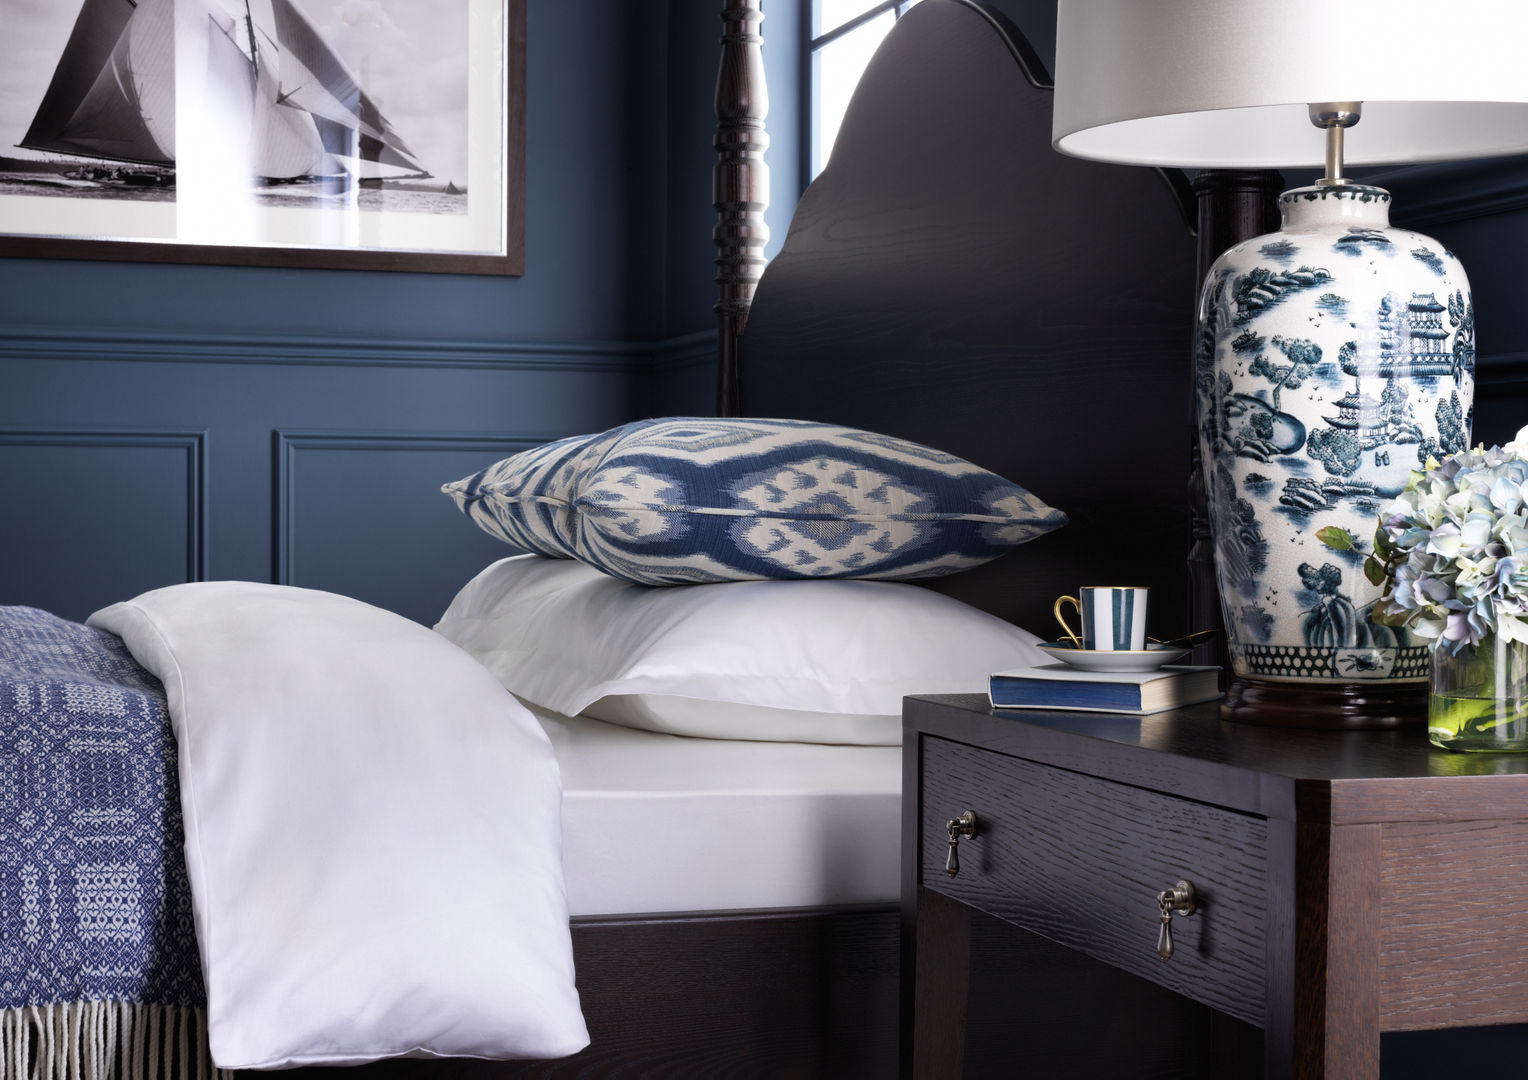 SS16 Style Guide - Coastal Elegance - Bedroom LuxDeco Dormitorios rurales country,bedroom,blue,bedside table